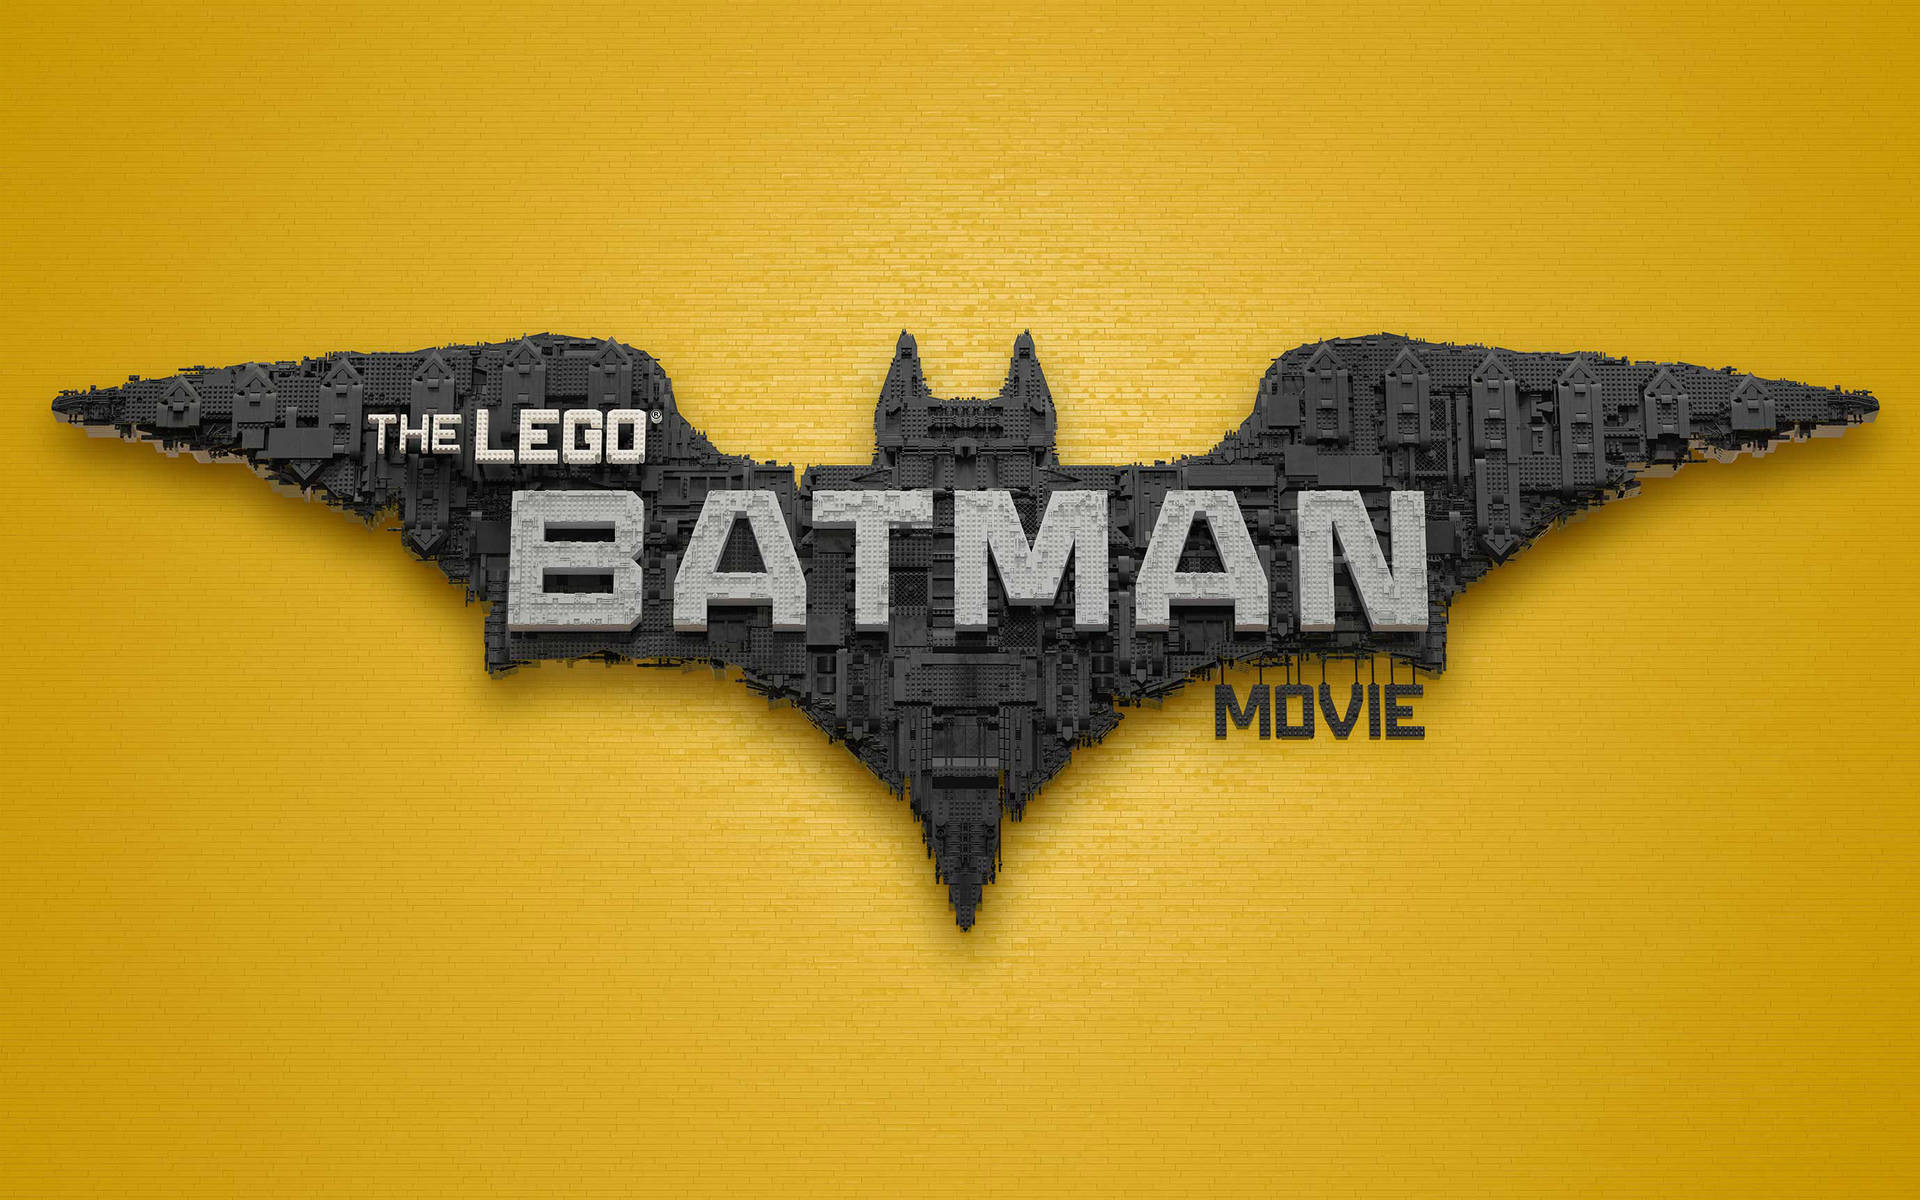 Free The Lego Batman Movie Wallpaper Downloads, [100+] The Lego Batman  Movie Wallpapers for FREE 